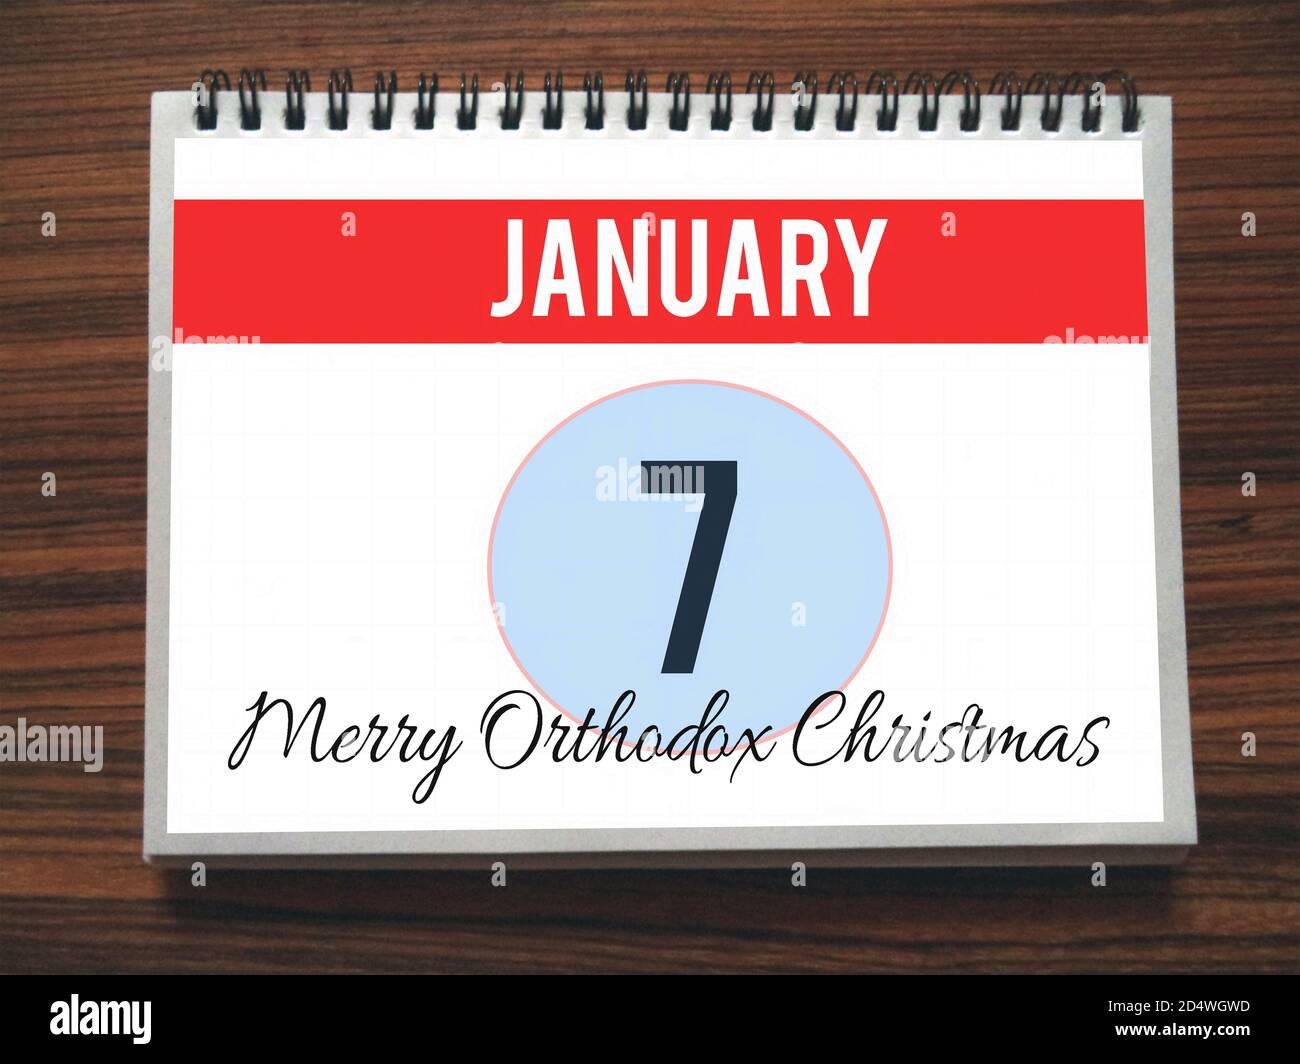 Calendar, January 7th, Merry Orthodox Christmas, on wooden background, illustration Stock Photo